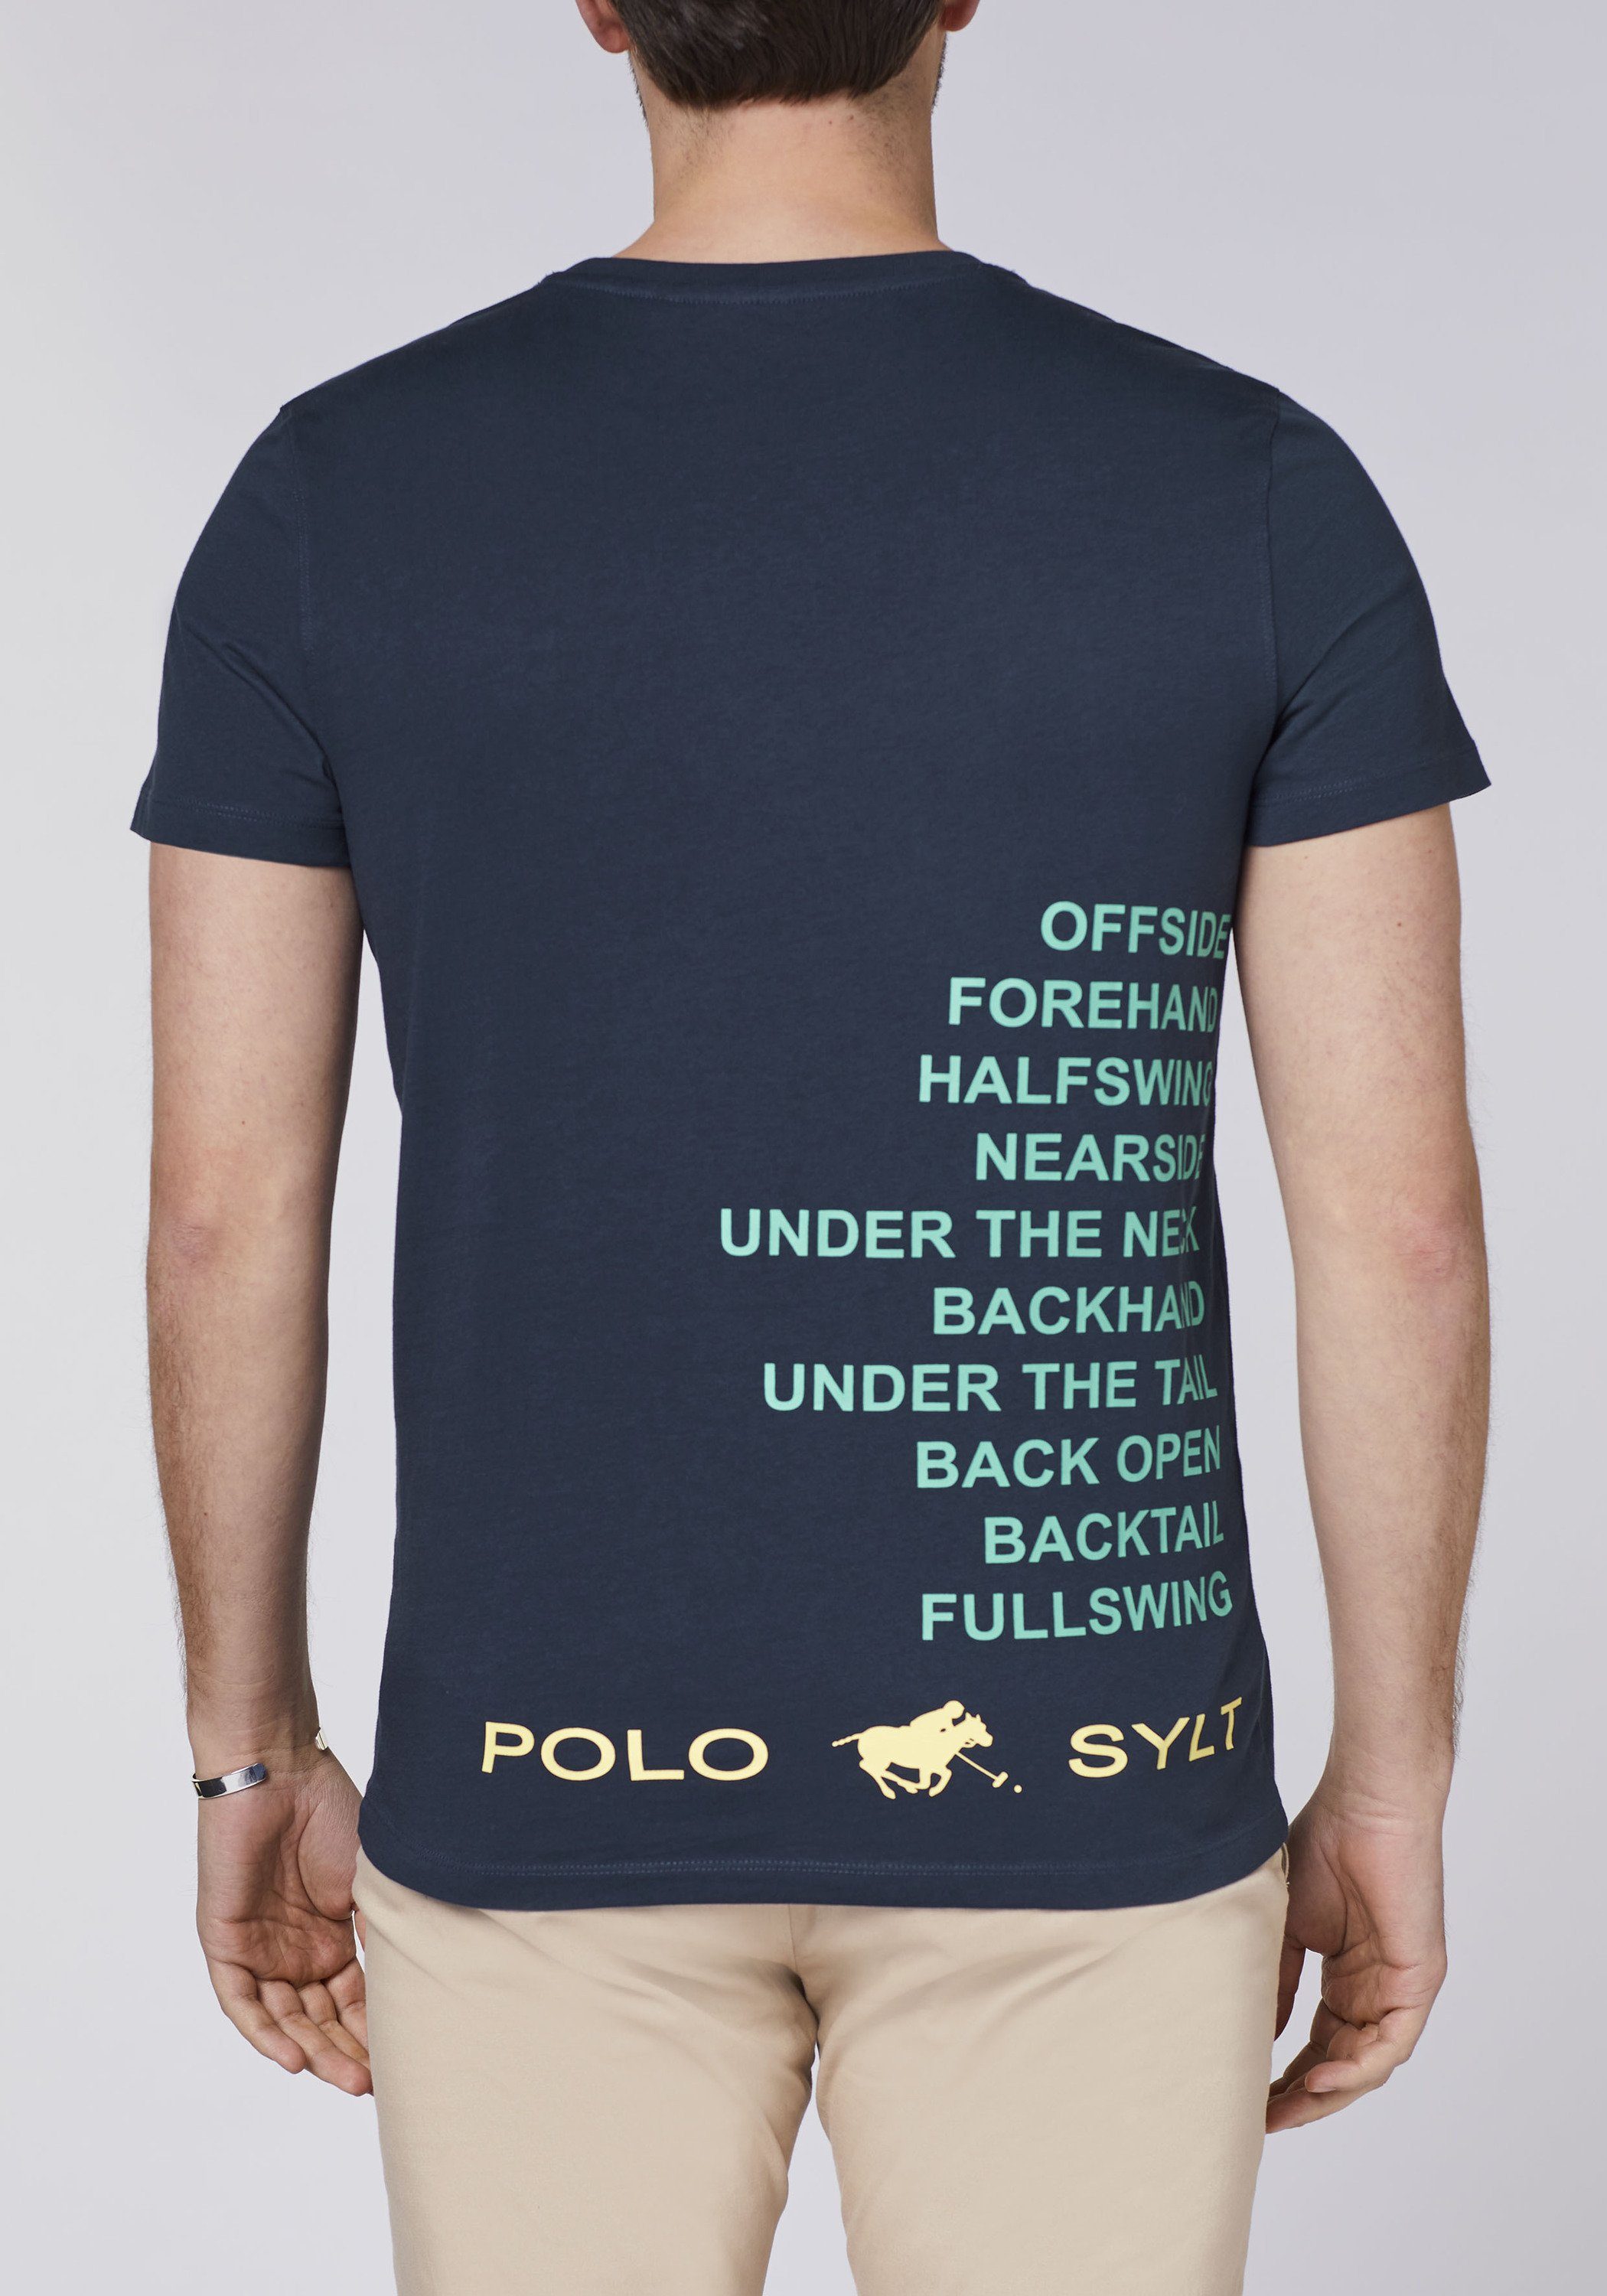 Print-Shirt Total Eclipse mit Sylt 19-4010 Print-Botschaft Polo